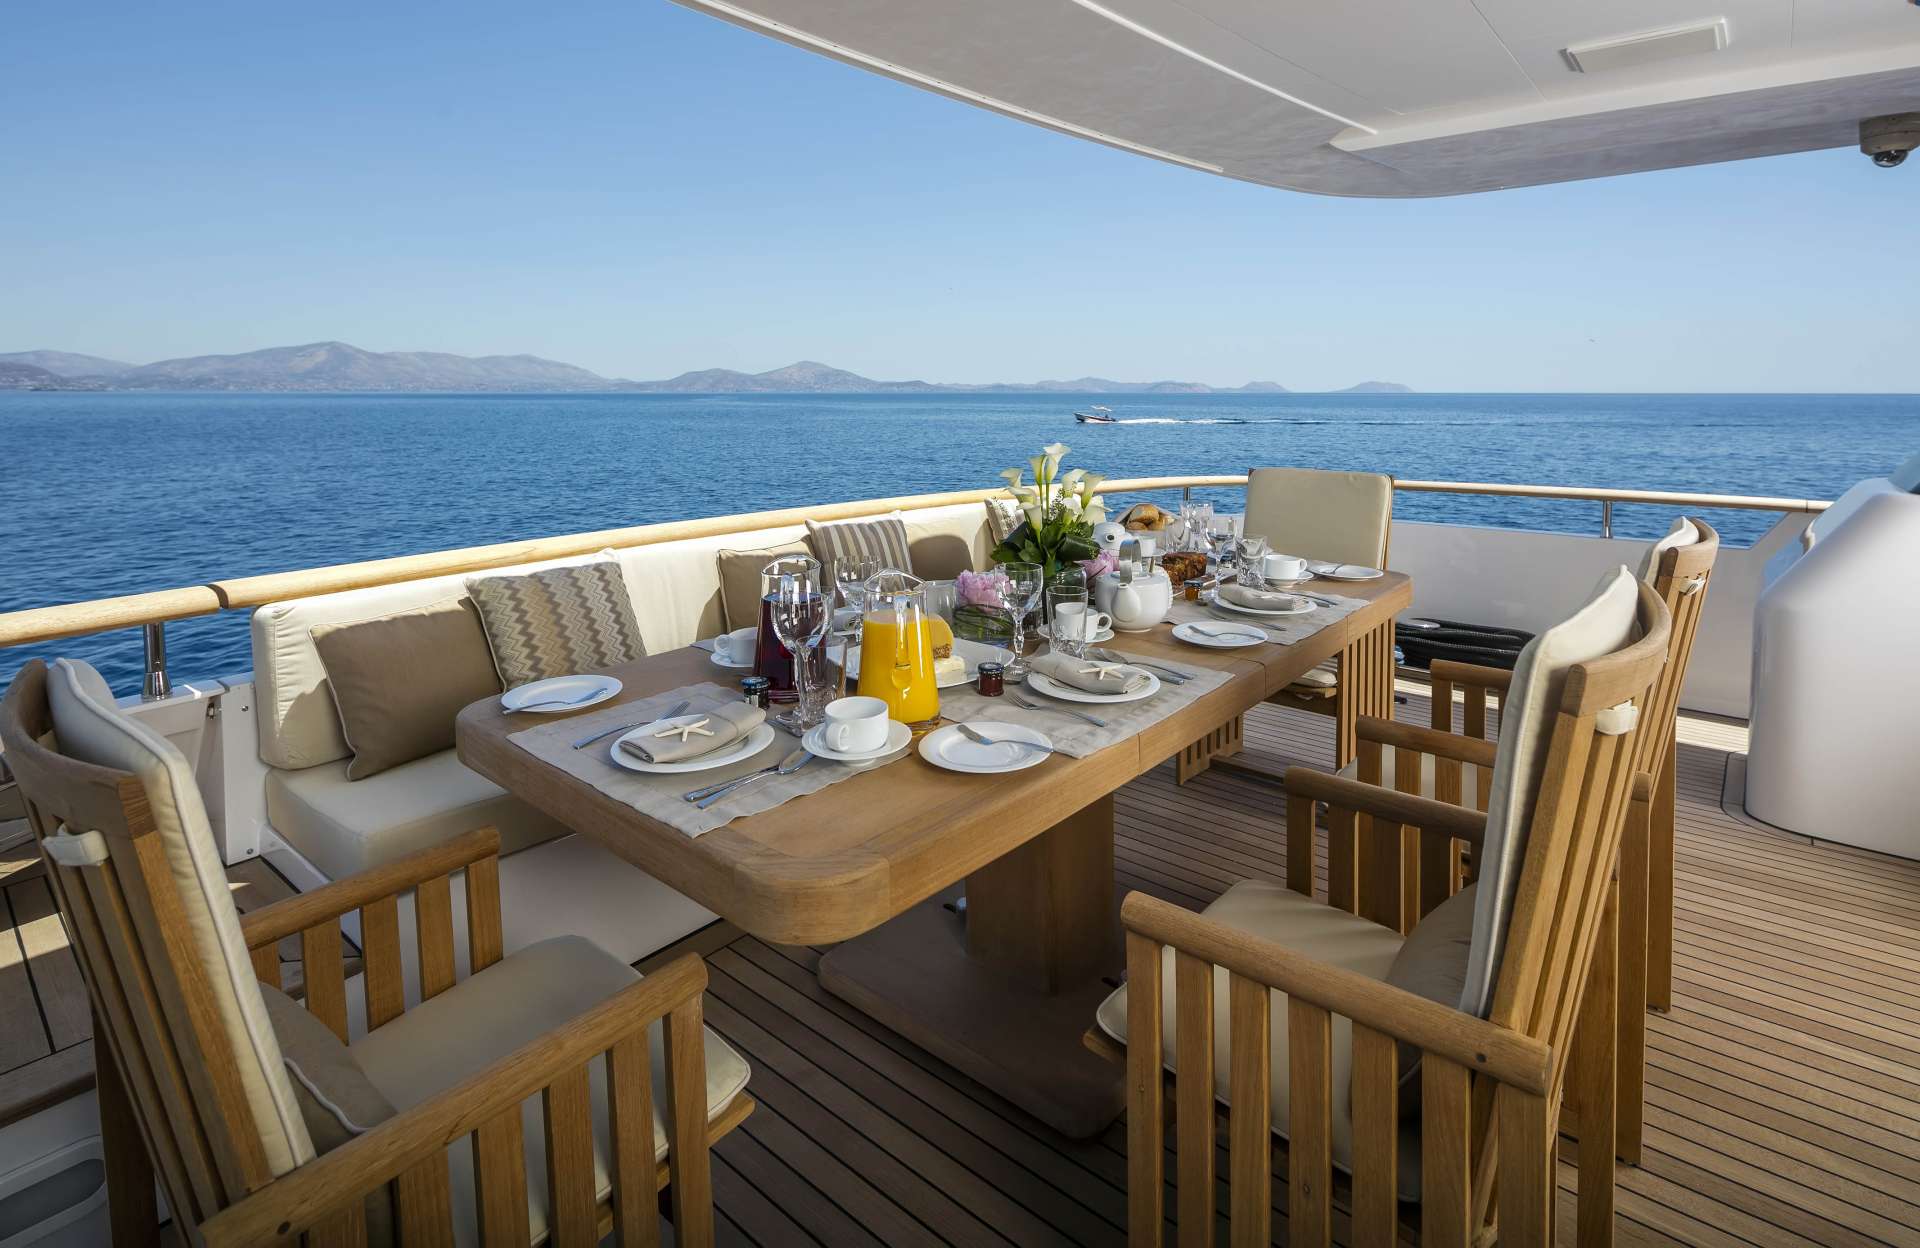 Motor Yacht 'ALEXIA AV' Dining table, 10 PAX, 6 Crew, 110.00 Ft, 33.00 Meters, Built 2006, Cantieri di Pisa, Italy, Refit Year 2017